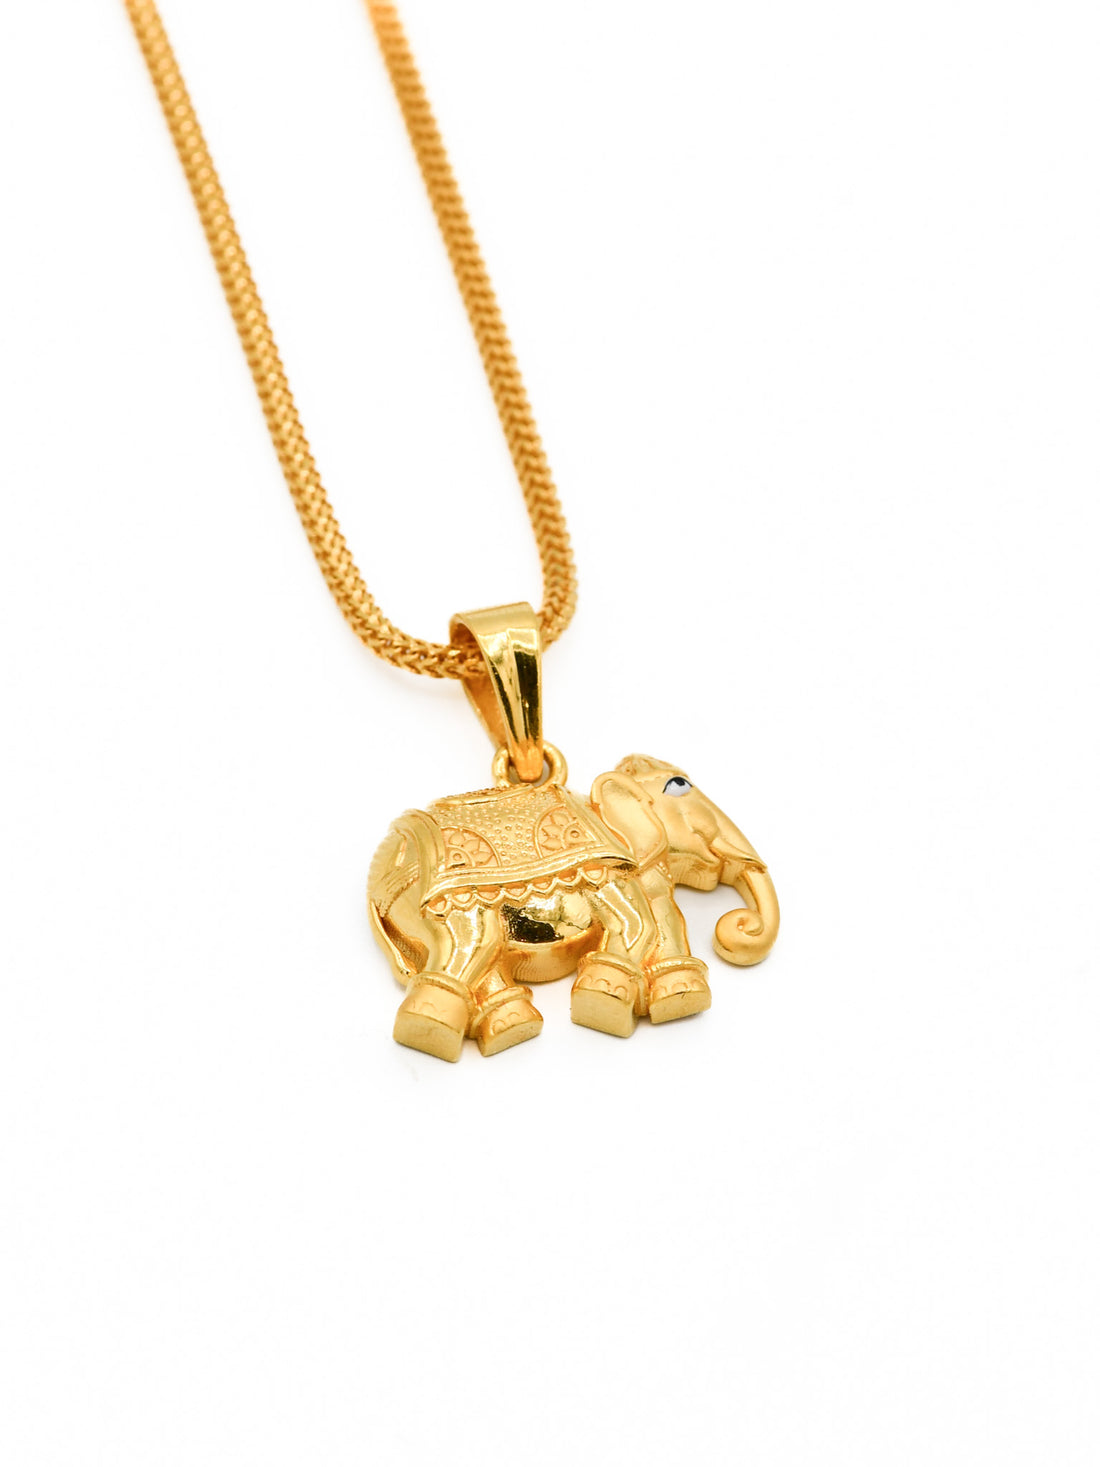 22ct Gold Elephant Pendant - Roop Darshan